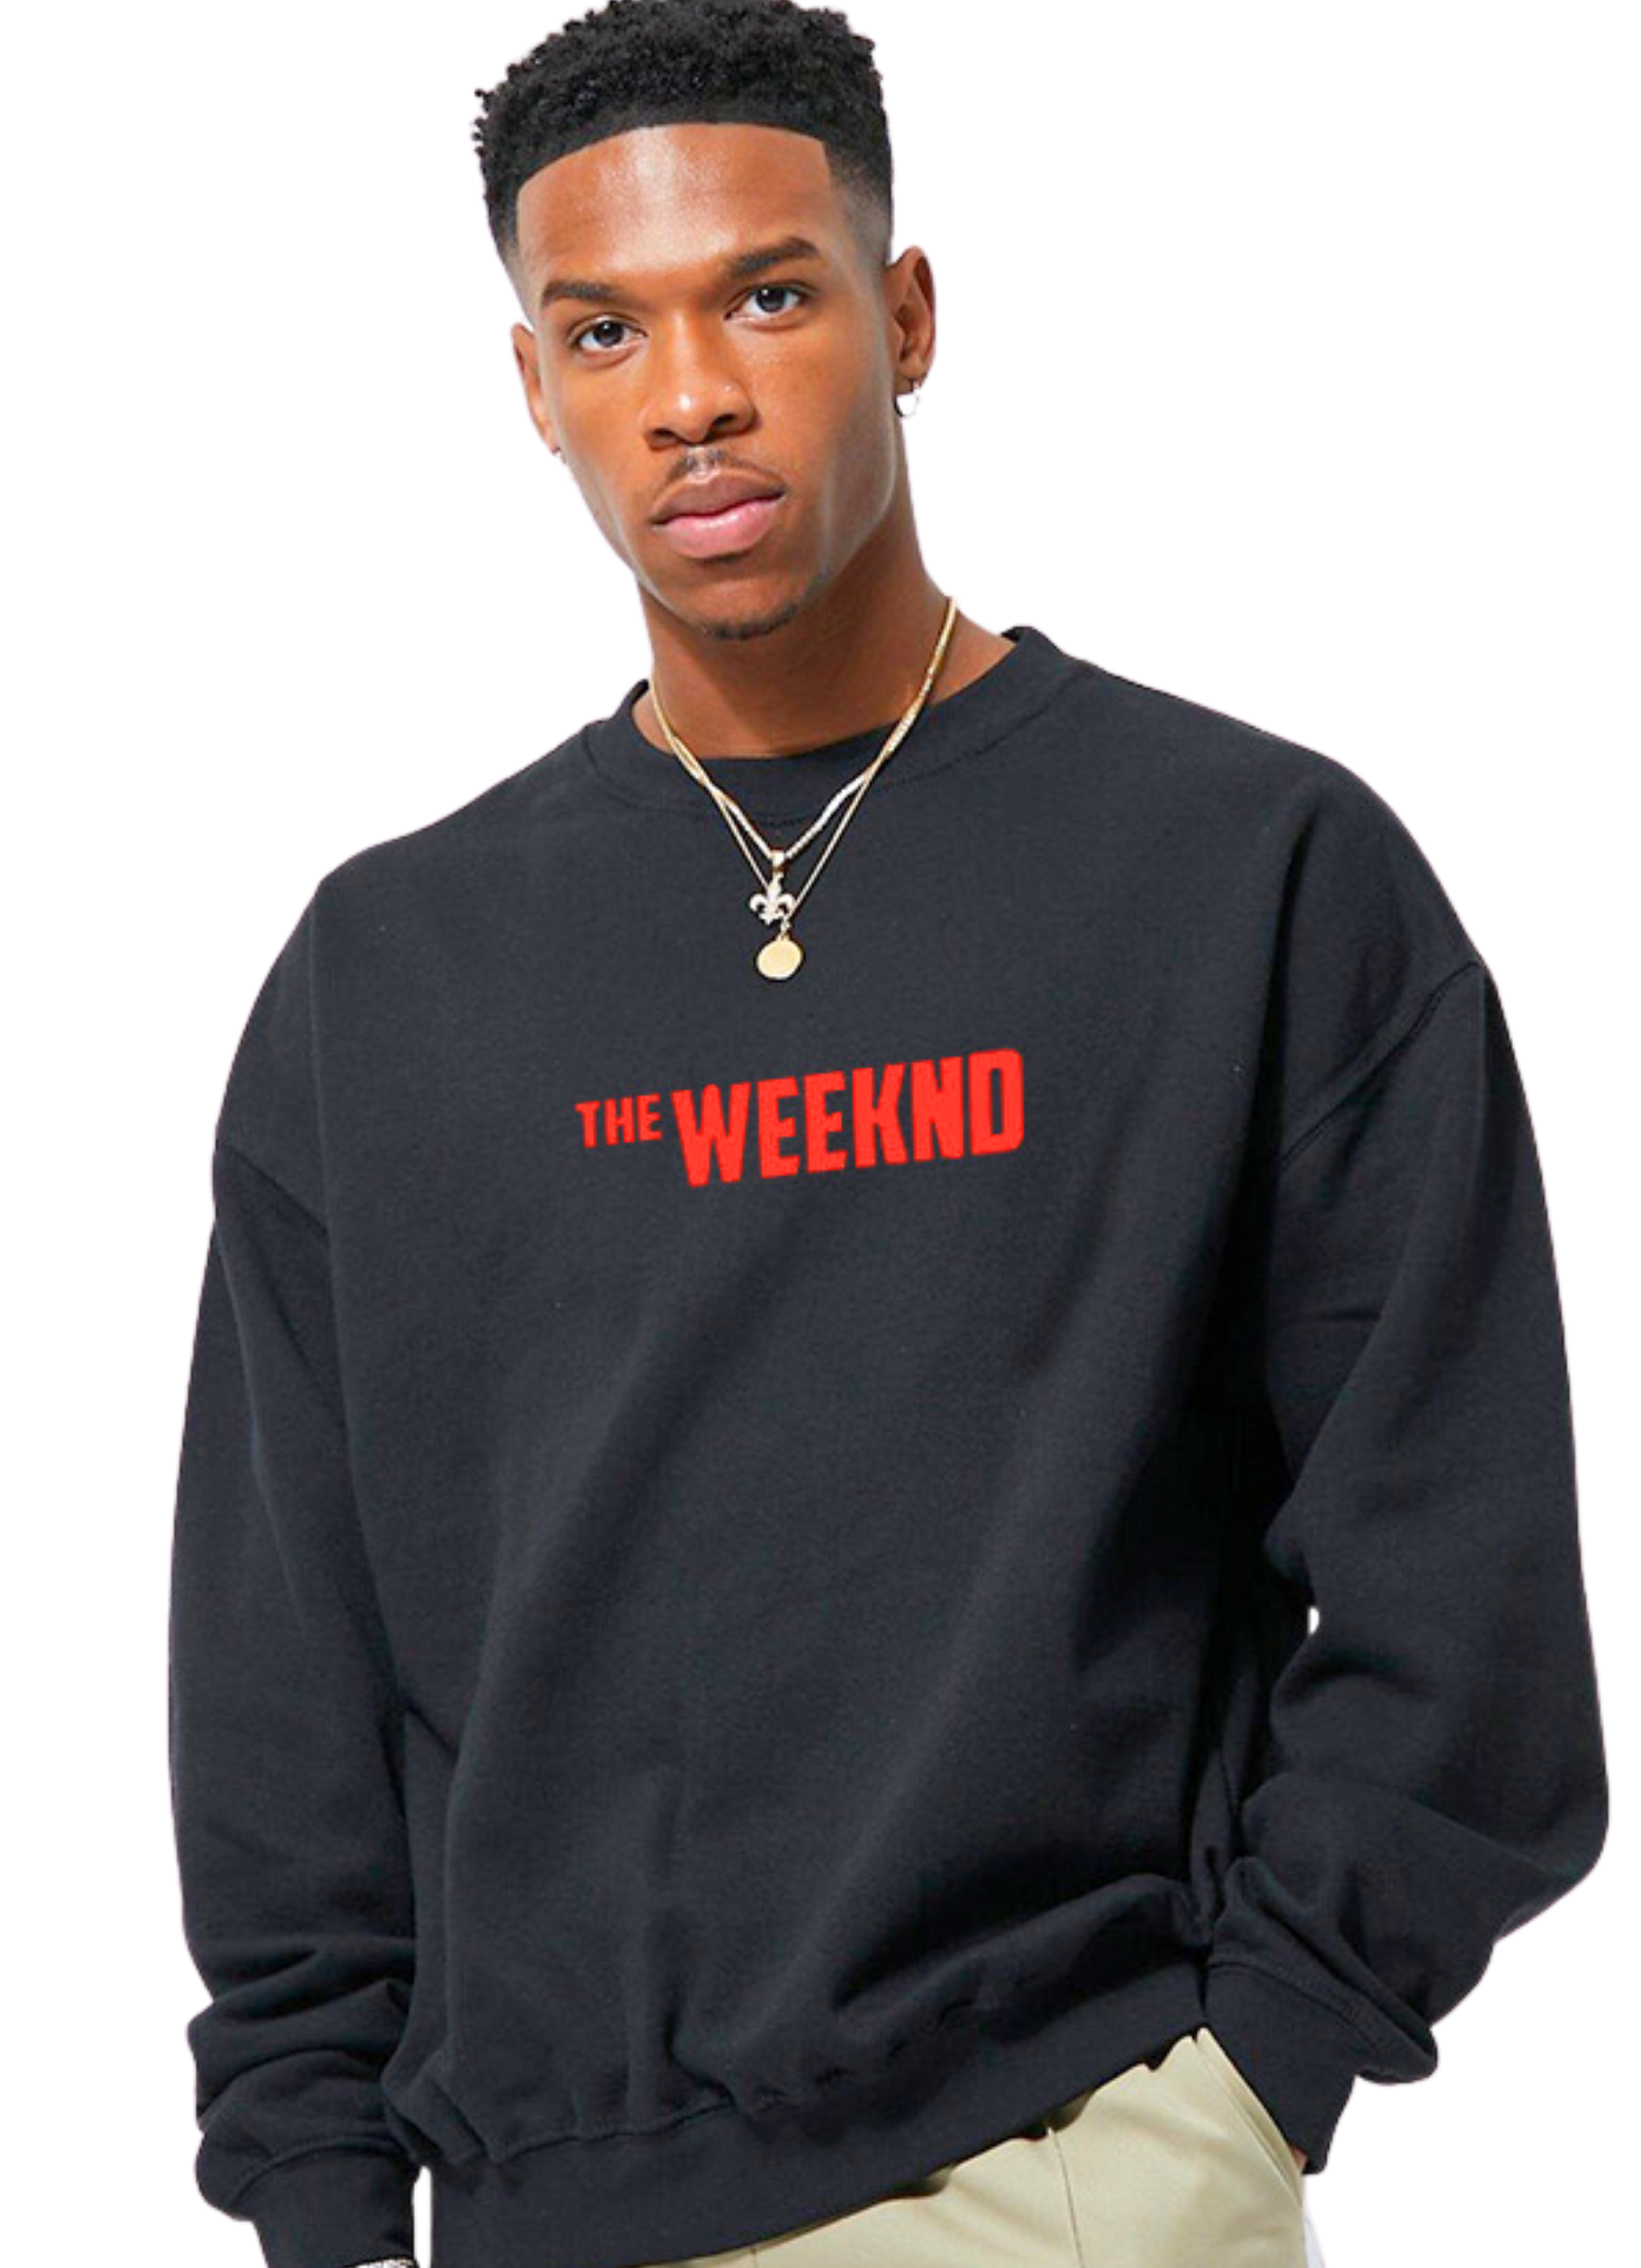 The Weeknd The Highlights F&B Unisex Sweatshirt